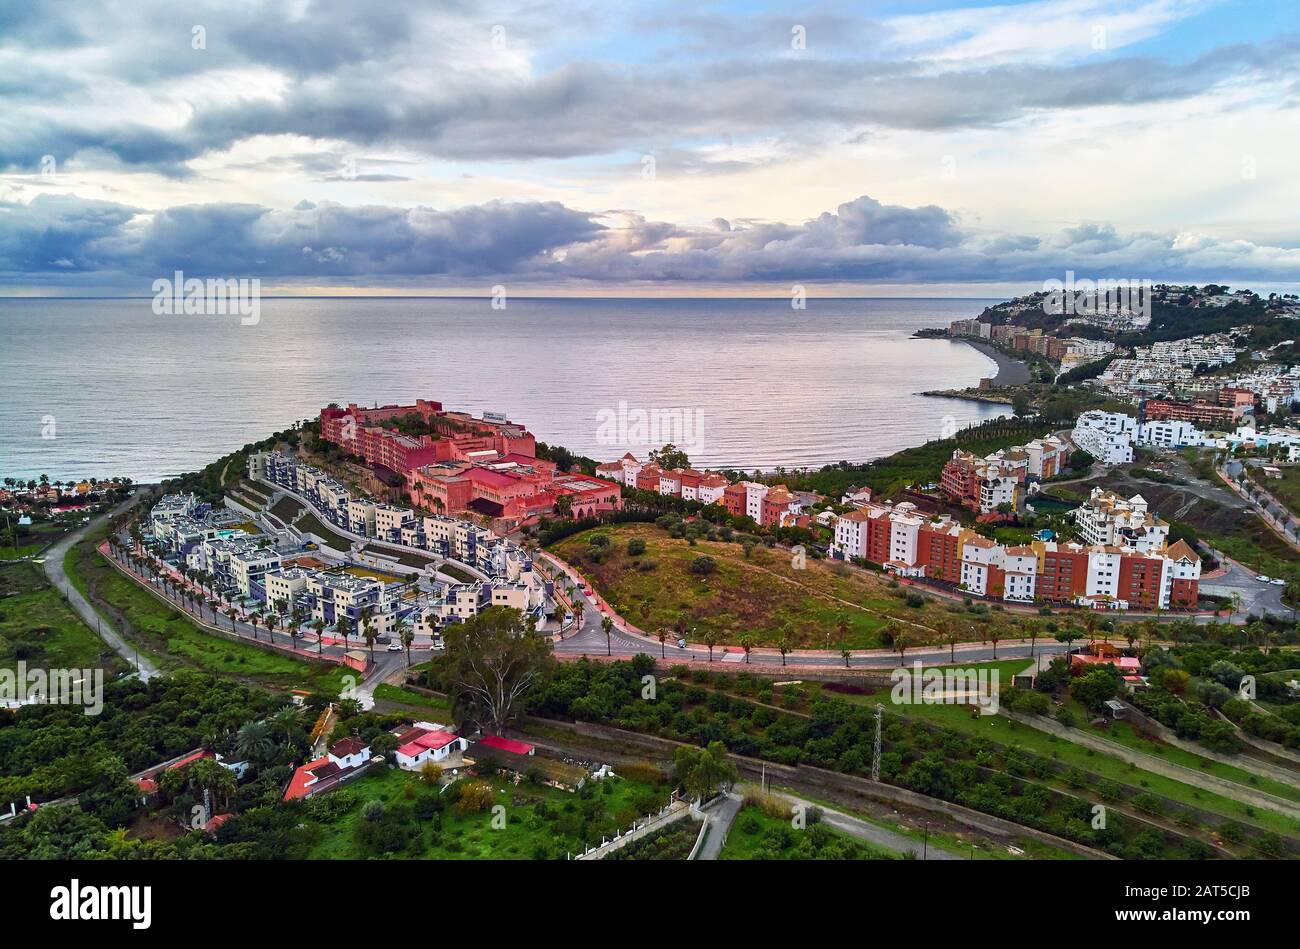 Luftbild der Stadt am Hang am Meer, Drone Almuñécar. Malerische Hügel, Täler, landwirtschaftliche Landschaft. Moody bewölkt Himmel über Meer Spanien Stockfoto